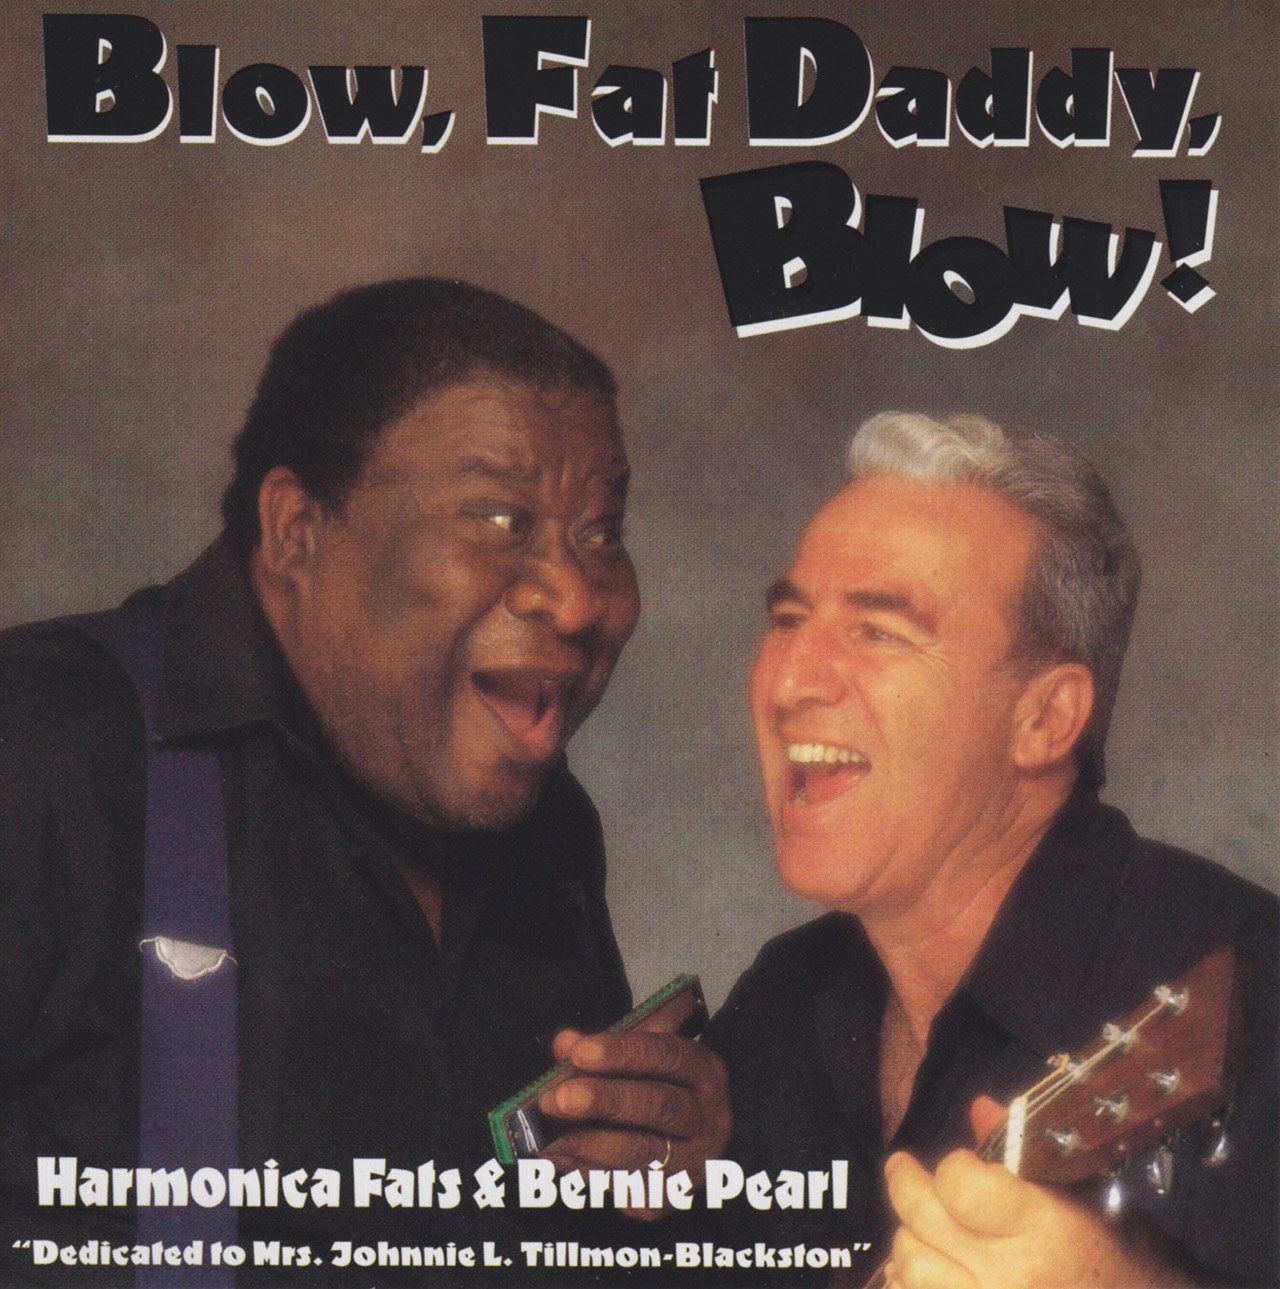 Harmonica Fats, Bernie Pearl 'Blow, Fat Daddy, Blow!' CD/1995/Blues/US